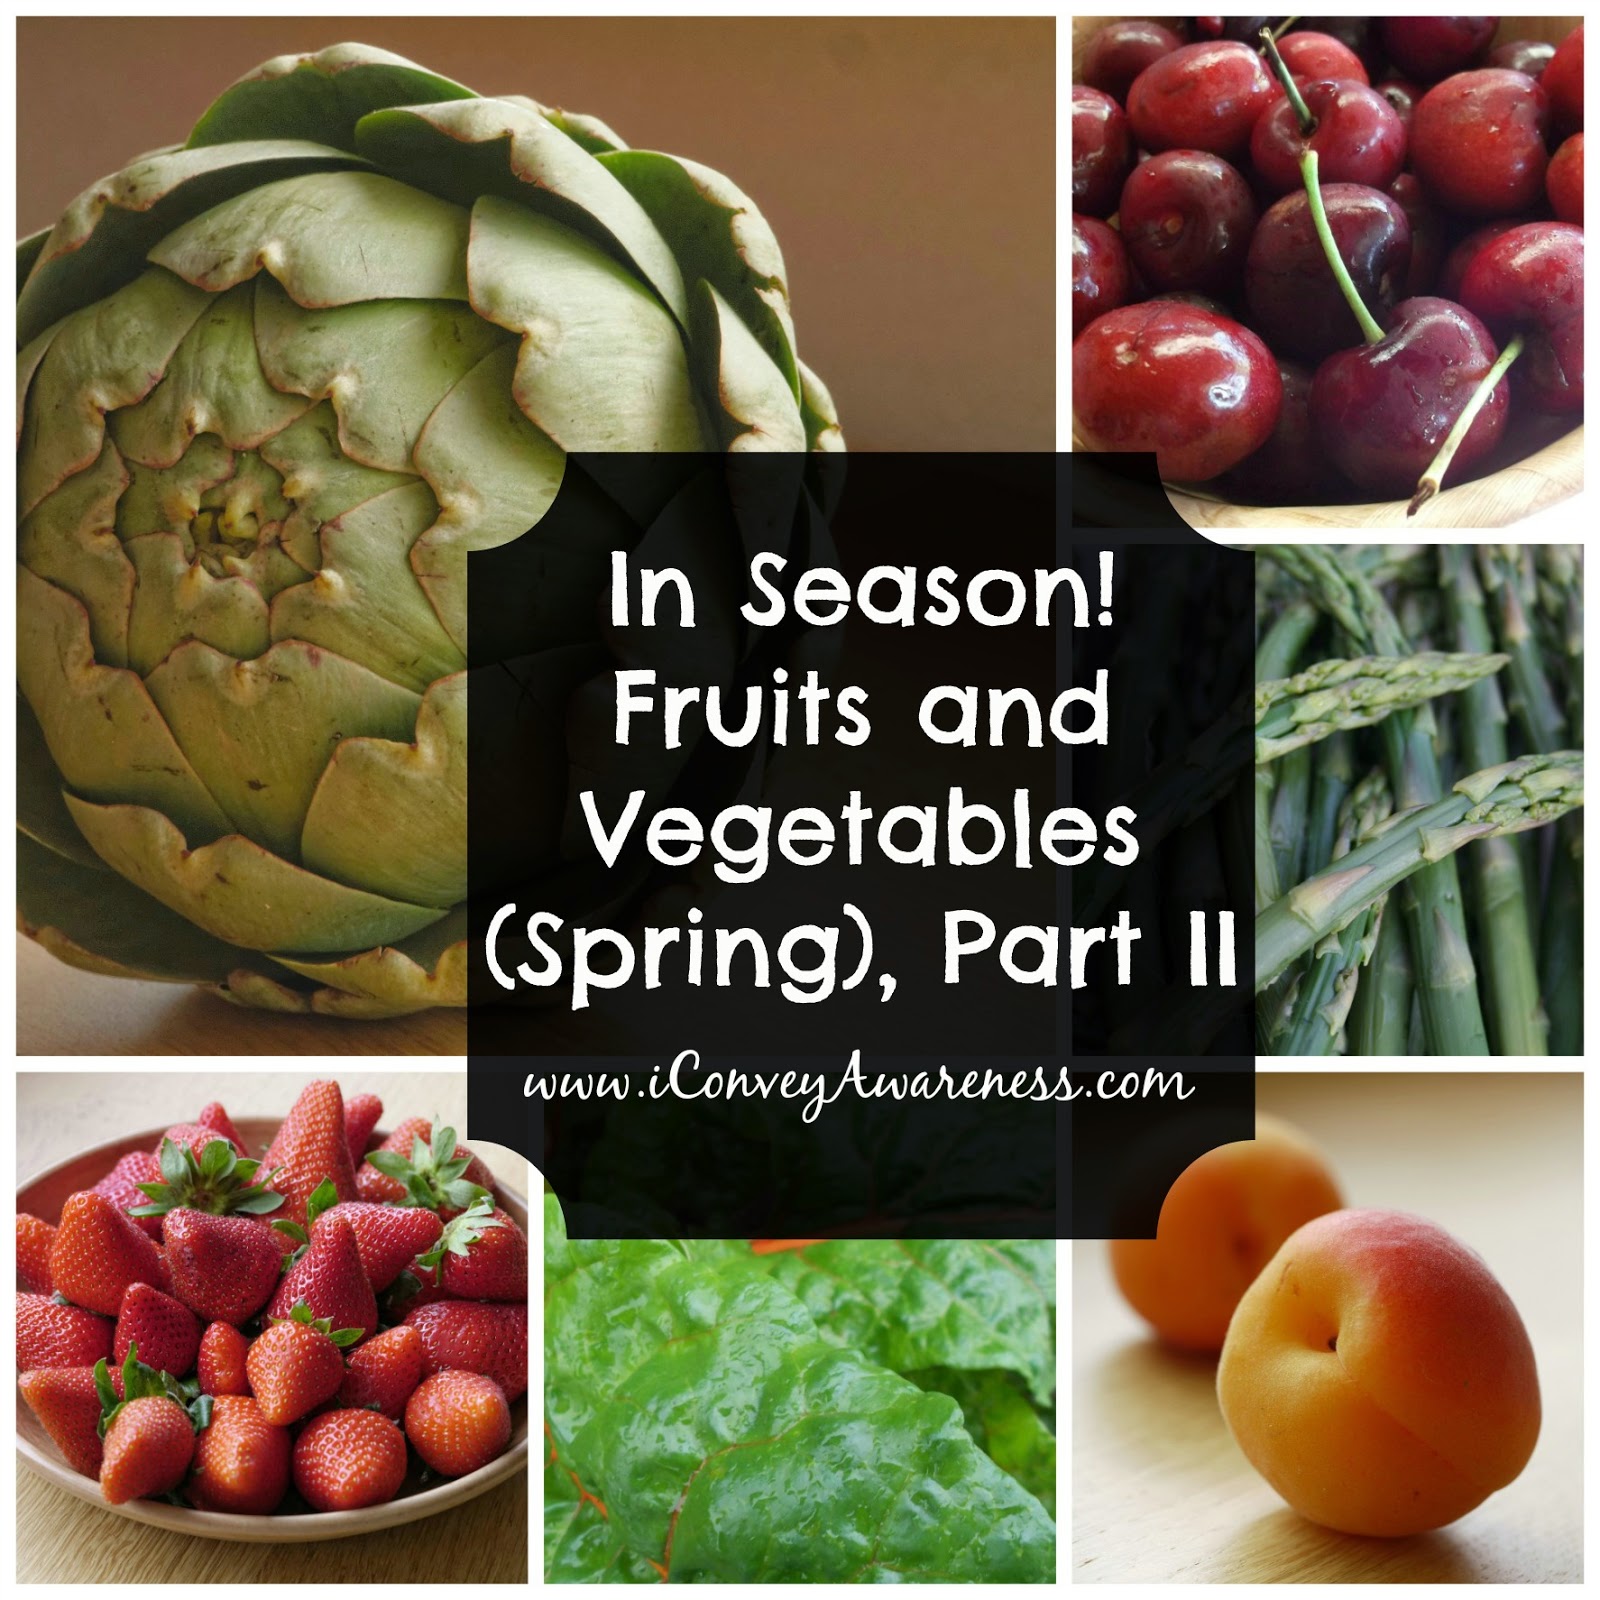 Convey Awareness | In Season! Fruits and Veggies (Spring) Part II 